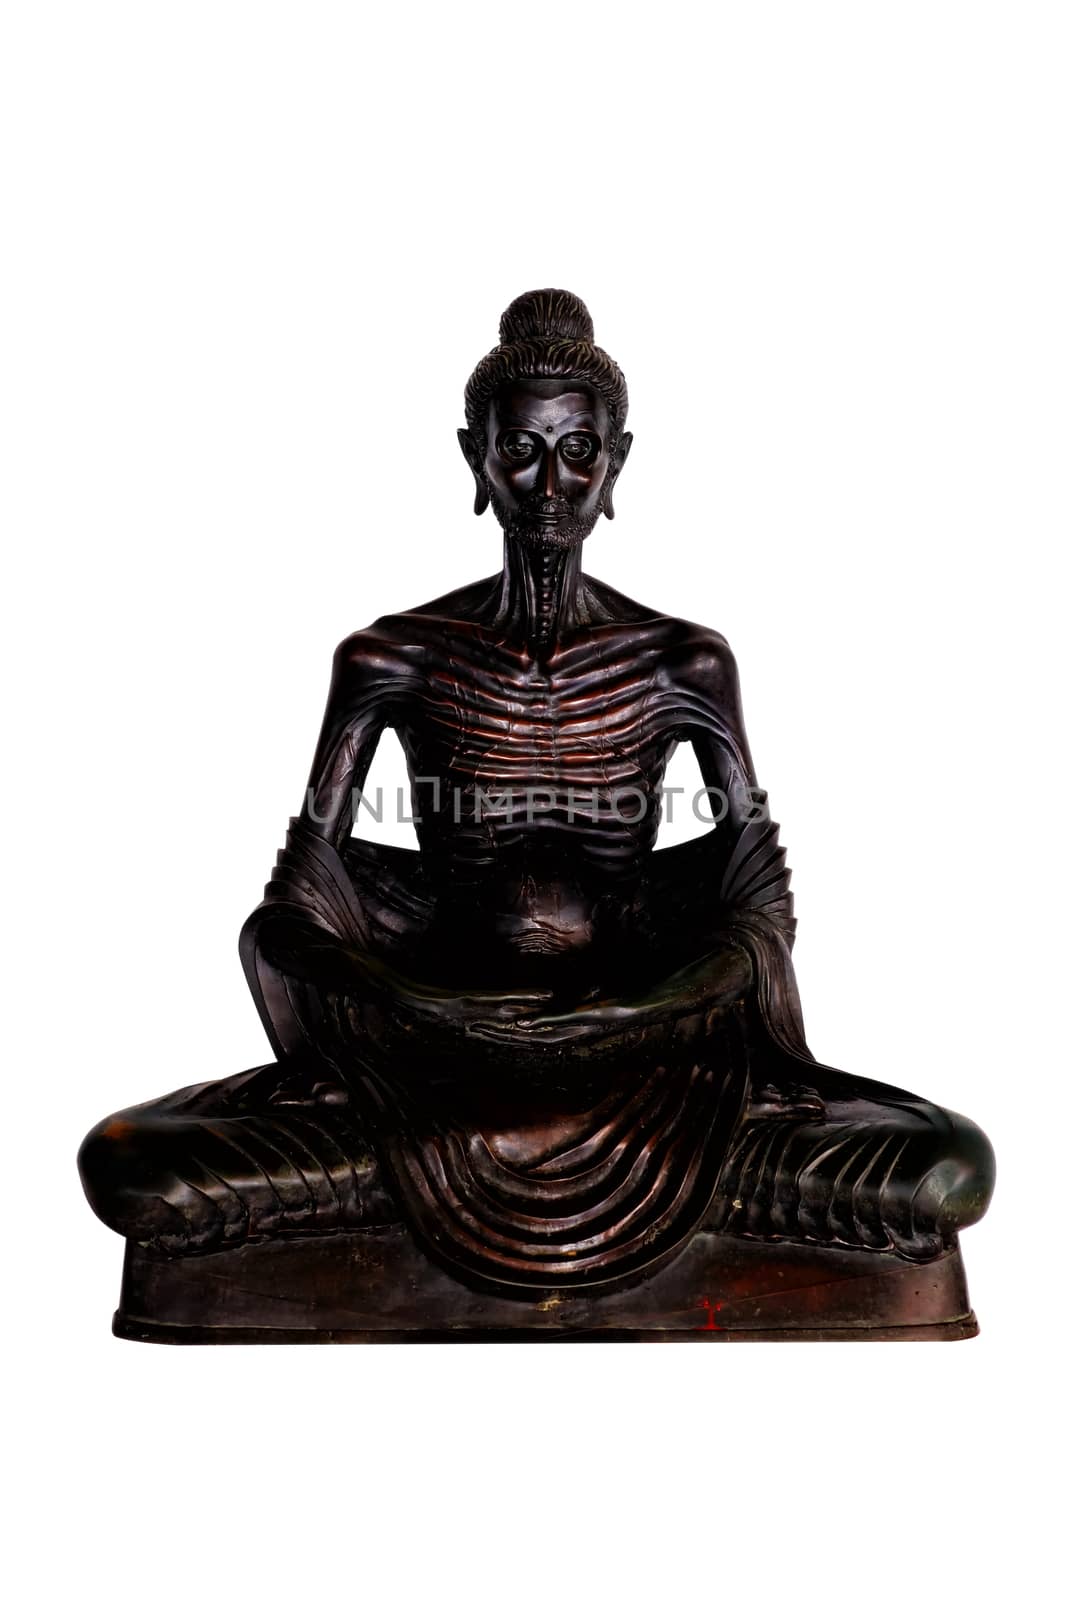 Ancient Black Buddha Image Isolated on White Background. by mesamong